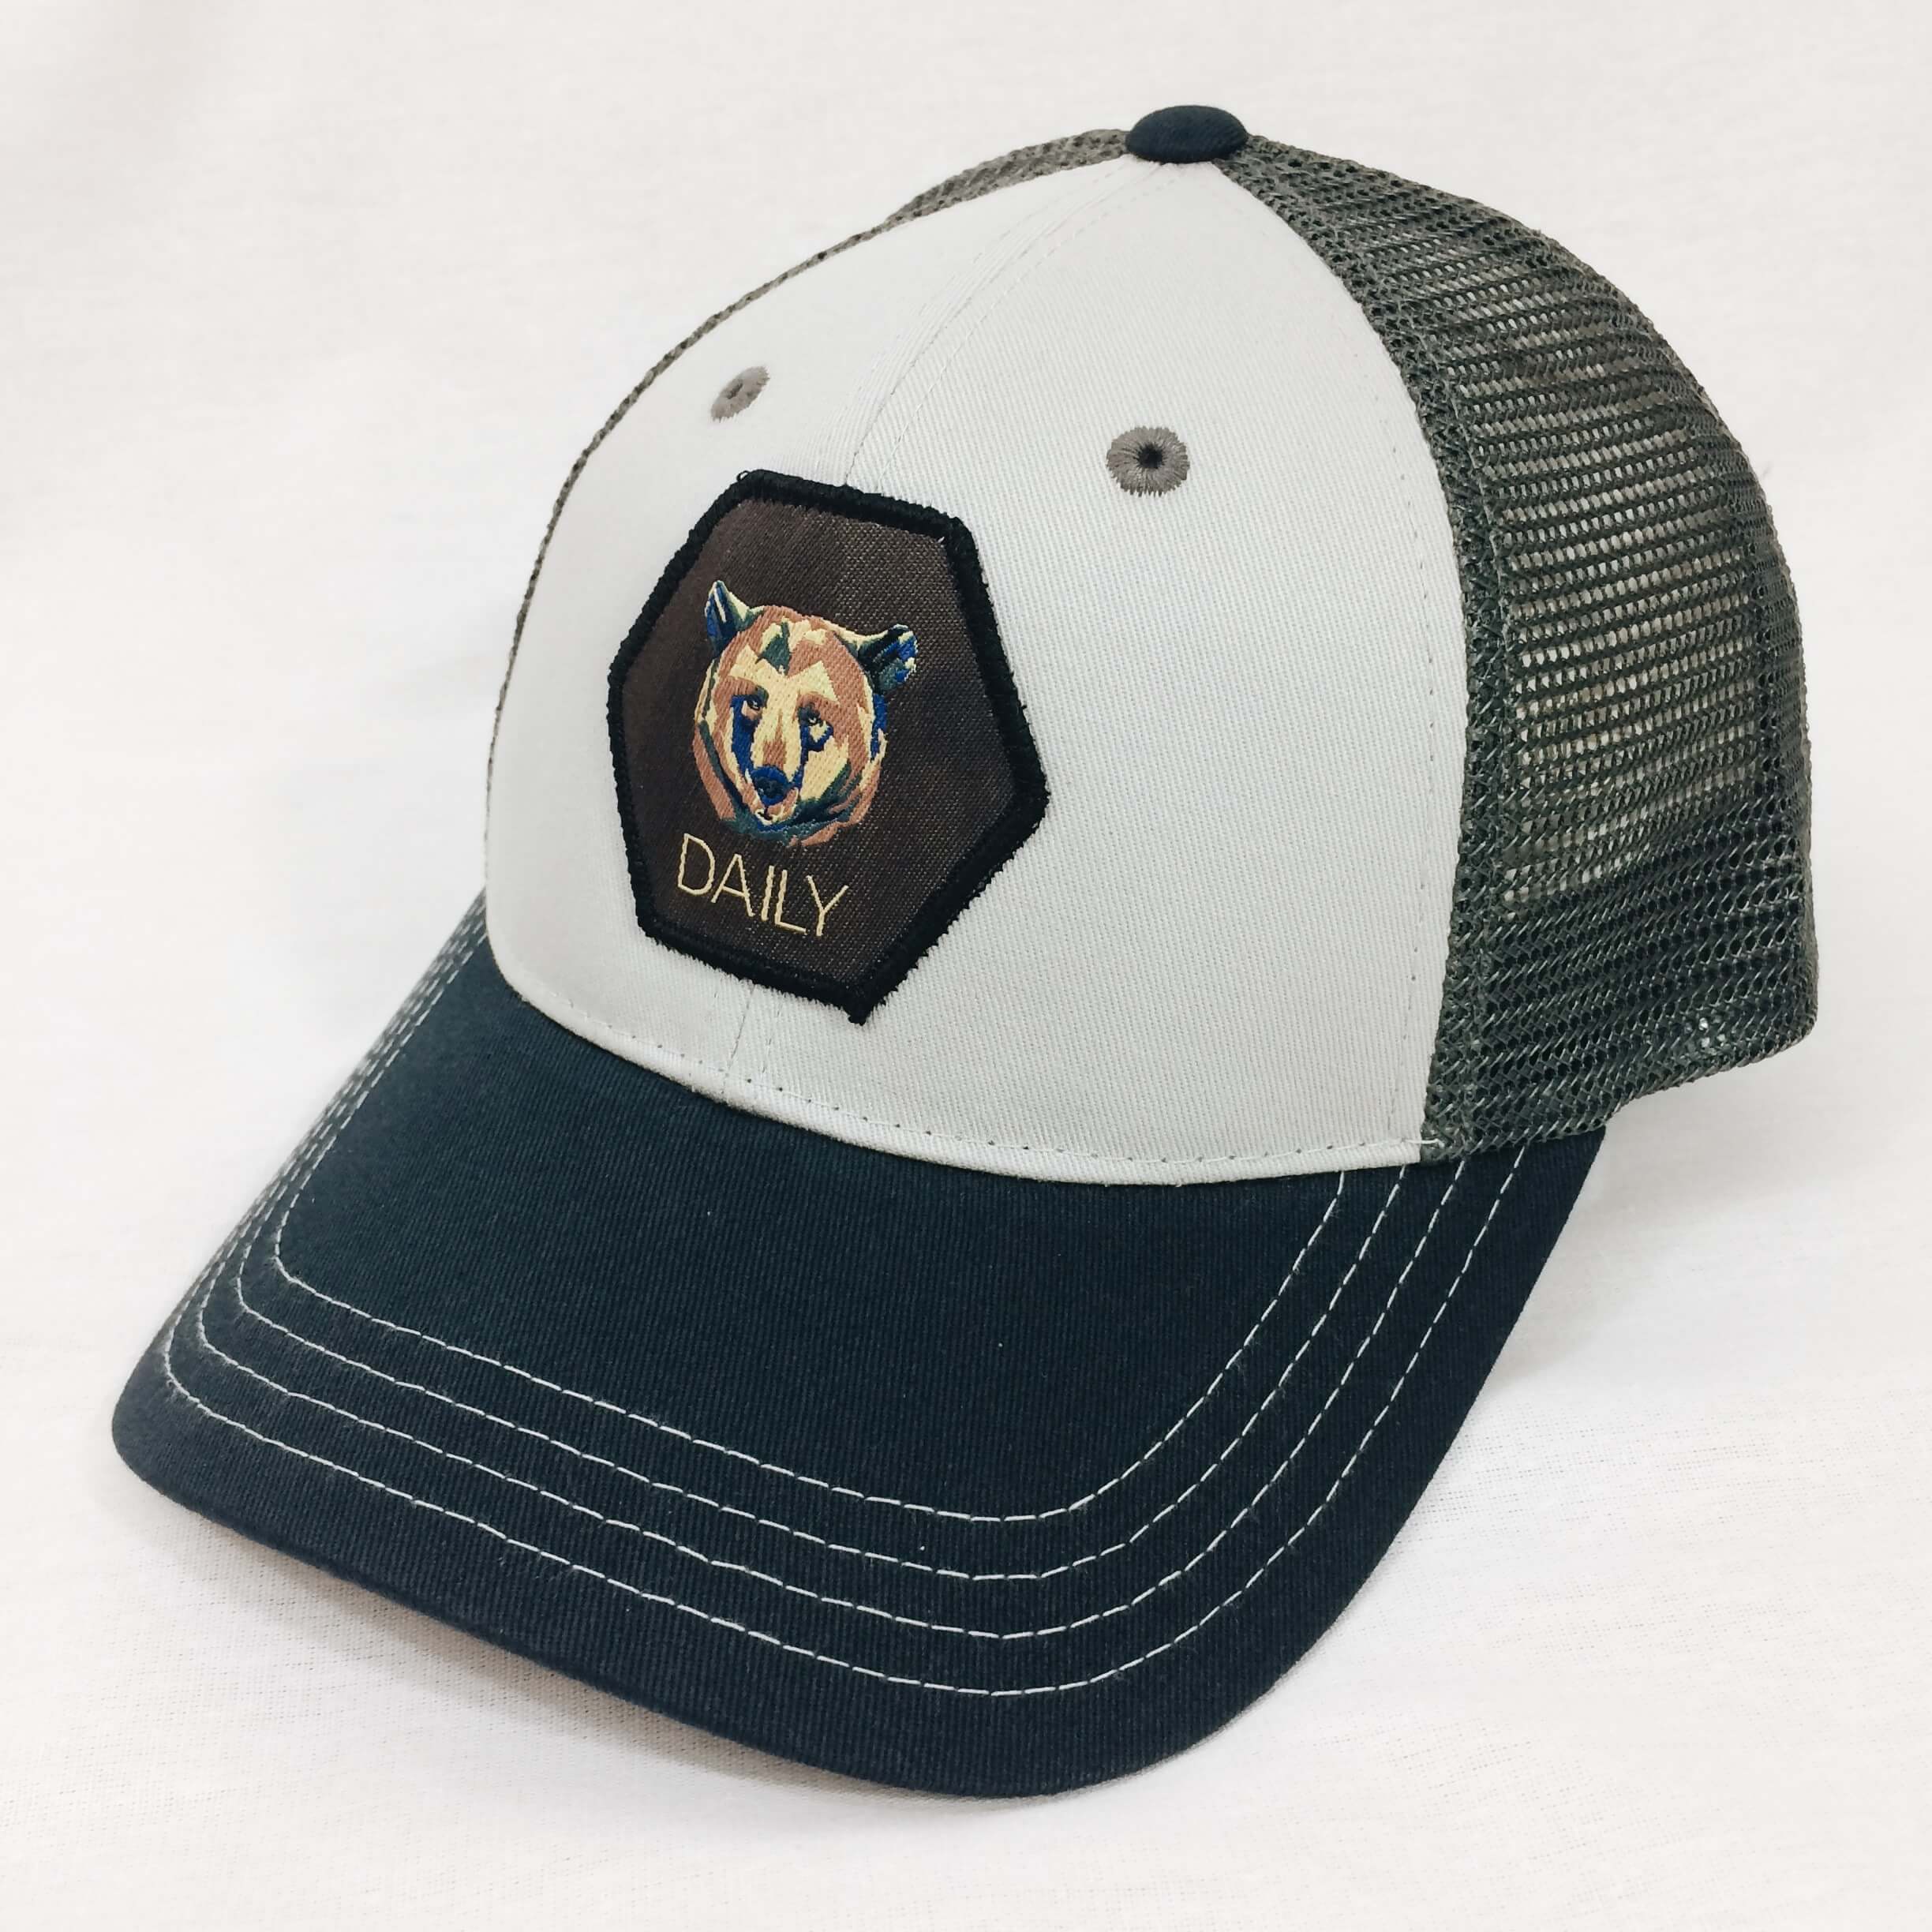 Christian navy blue stone charcoal gray bear trucker cap hat by DonKeySpeaksUp